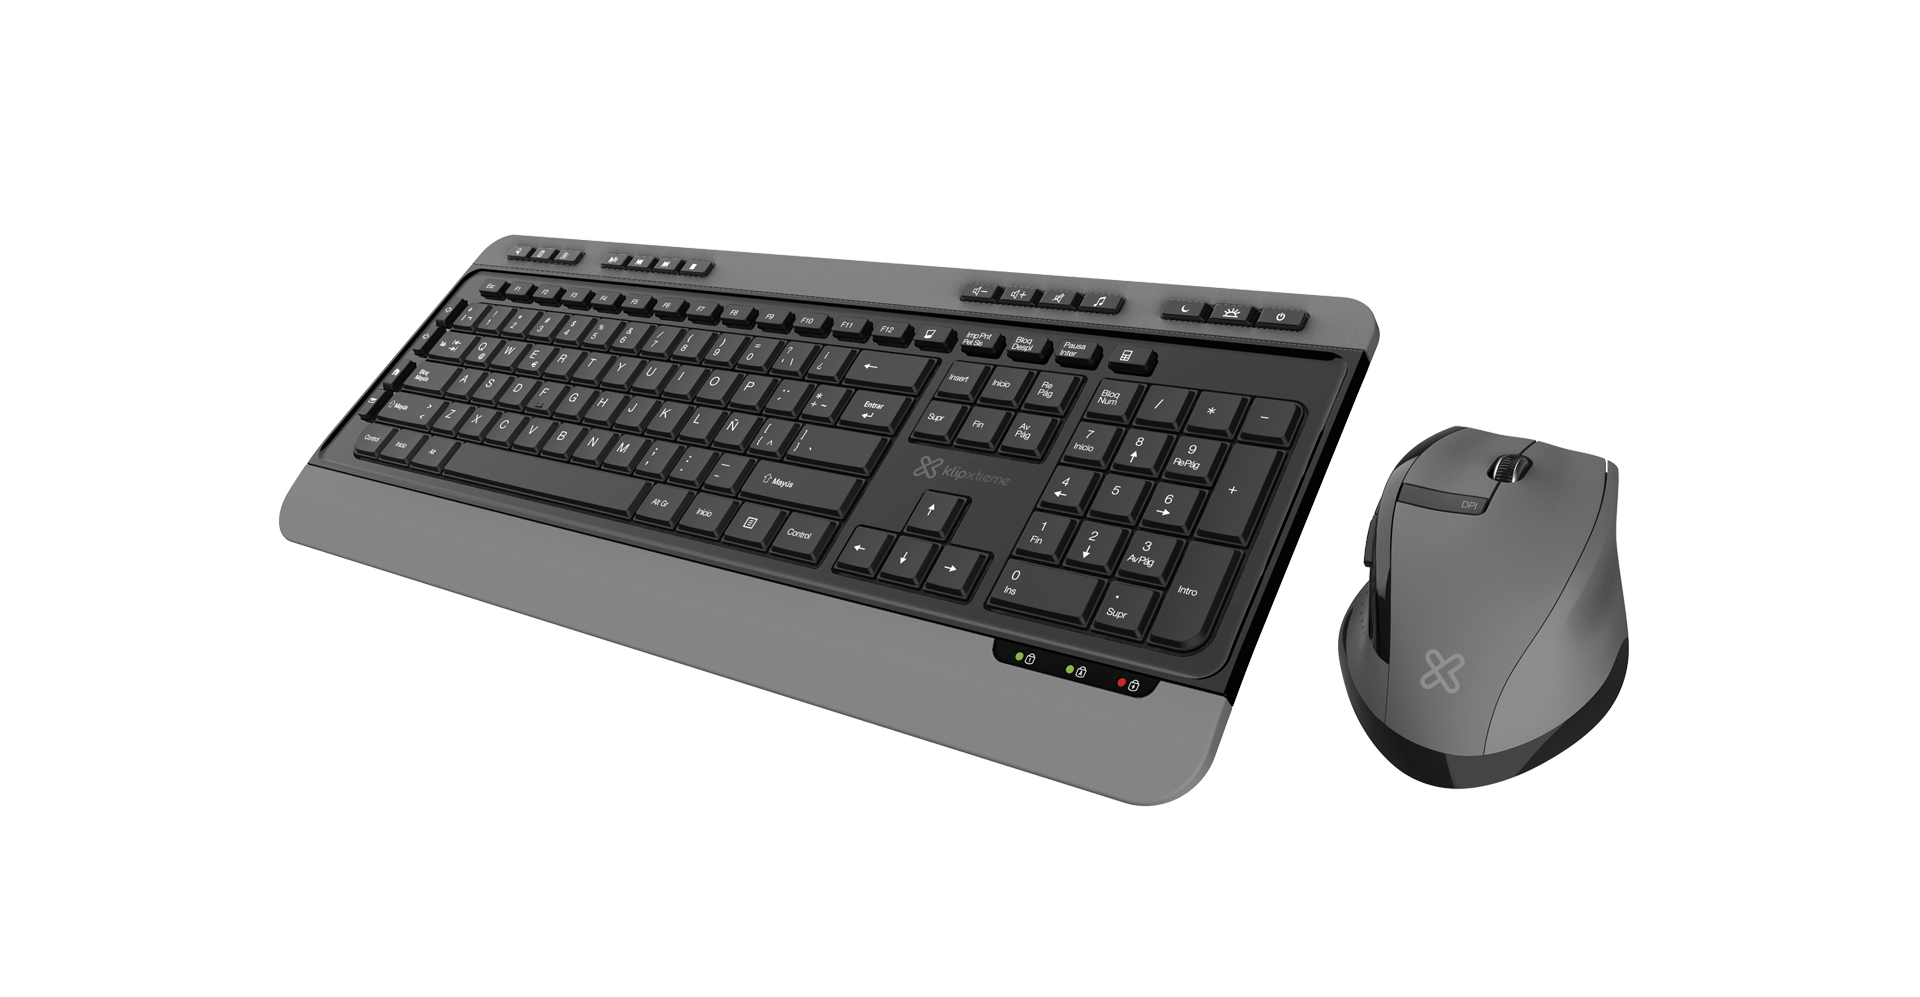 Klip Xtreme  Keyboard And Mouse Set  Spanish  Wireless  24 Ghz  Black And Gray - KLIP XTREME